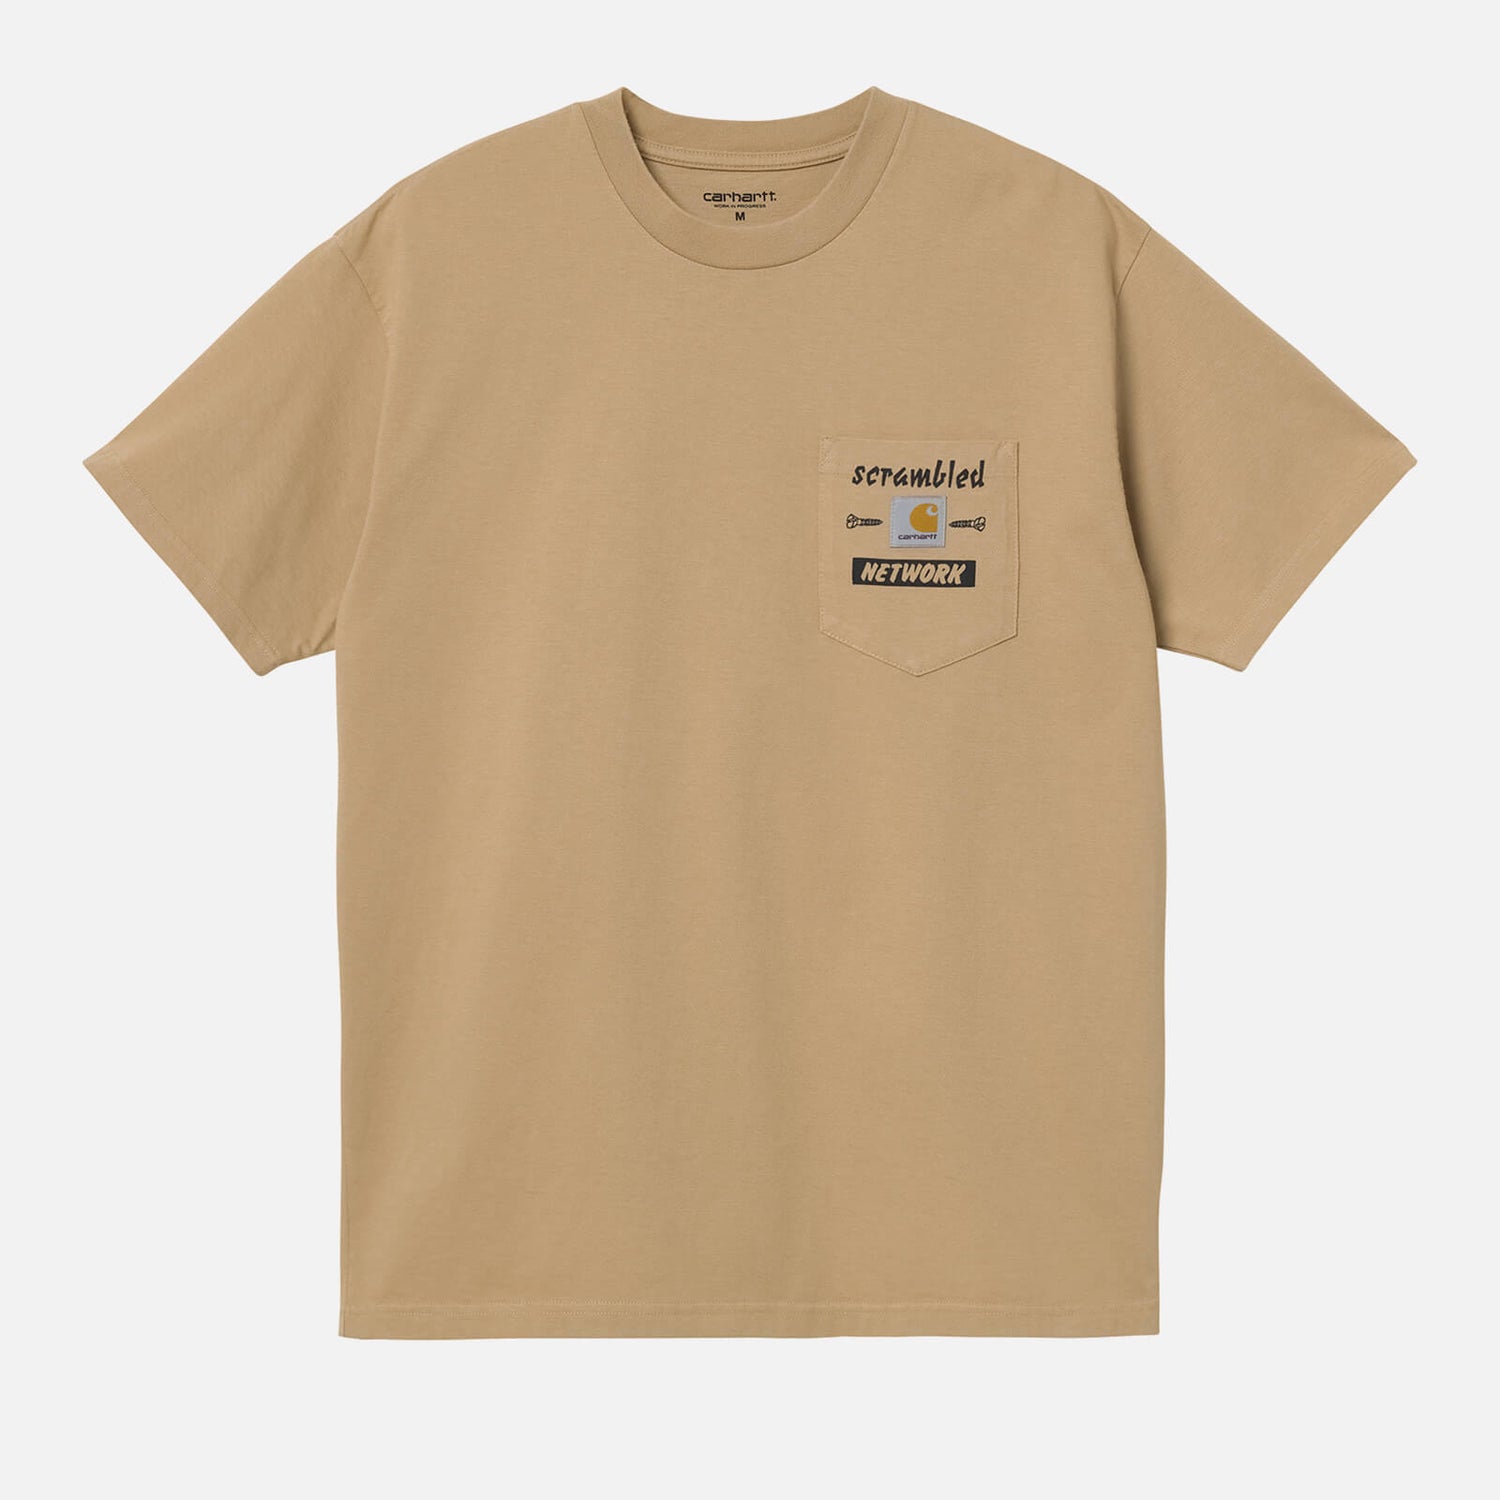 Carhartt WIP Men's Scramble Pocket T-Shirt - Dusty H Brown